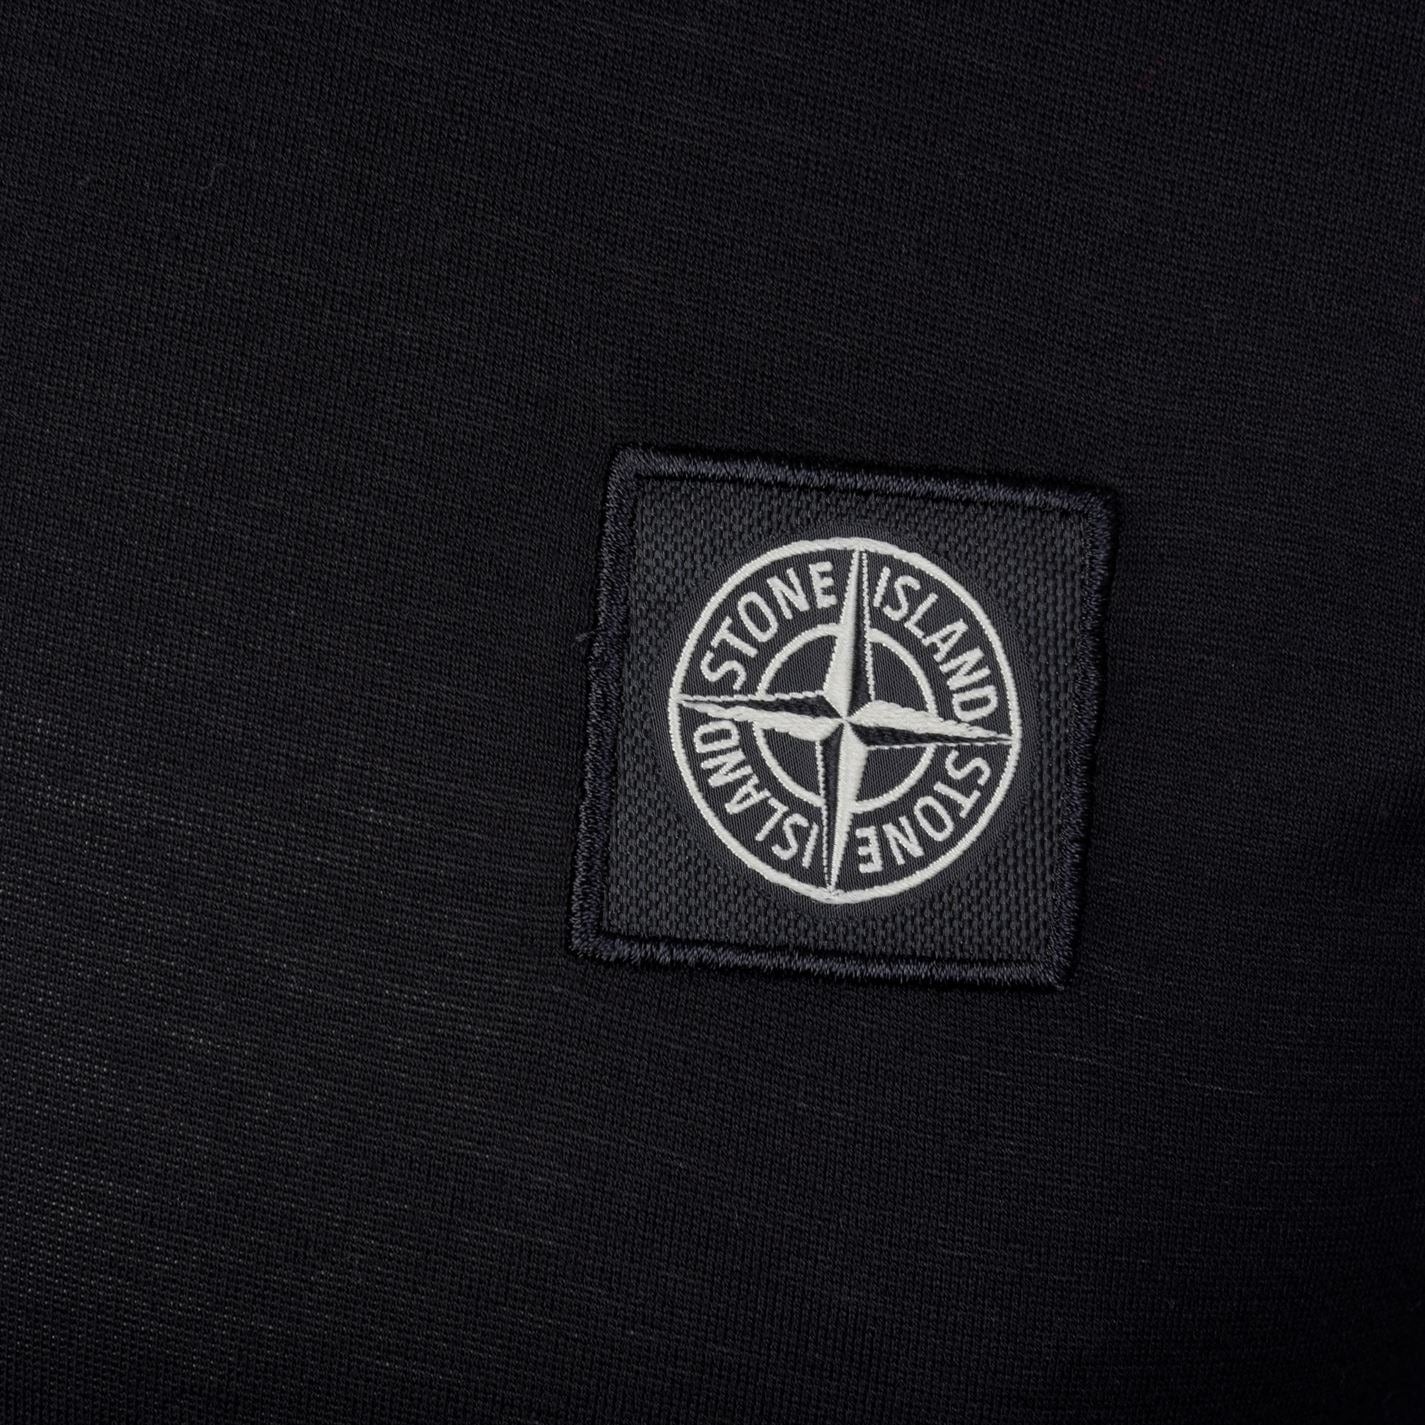 Stone Island Compass Logo T-Shirt Black Long Sleeve